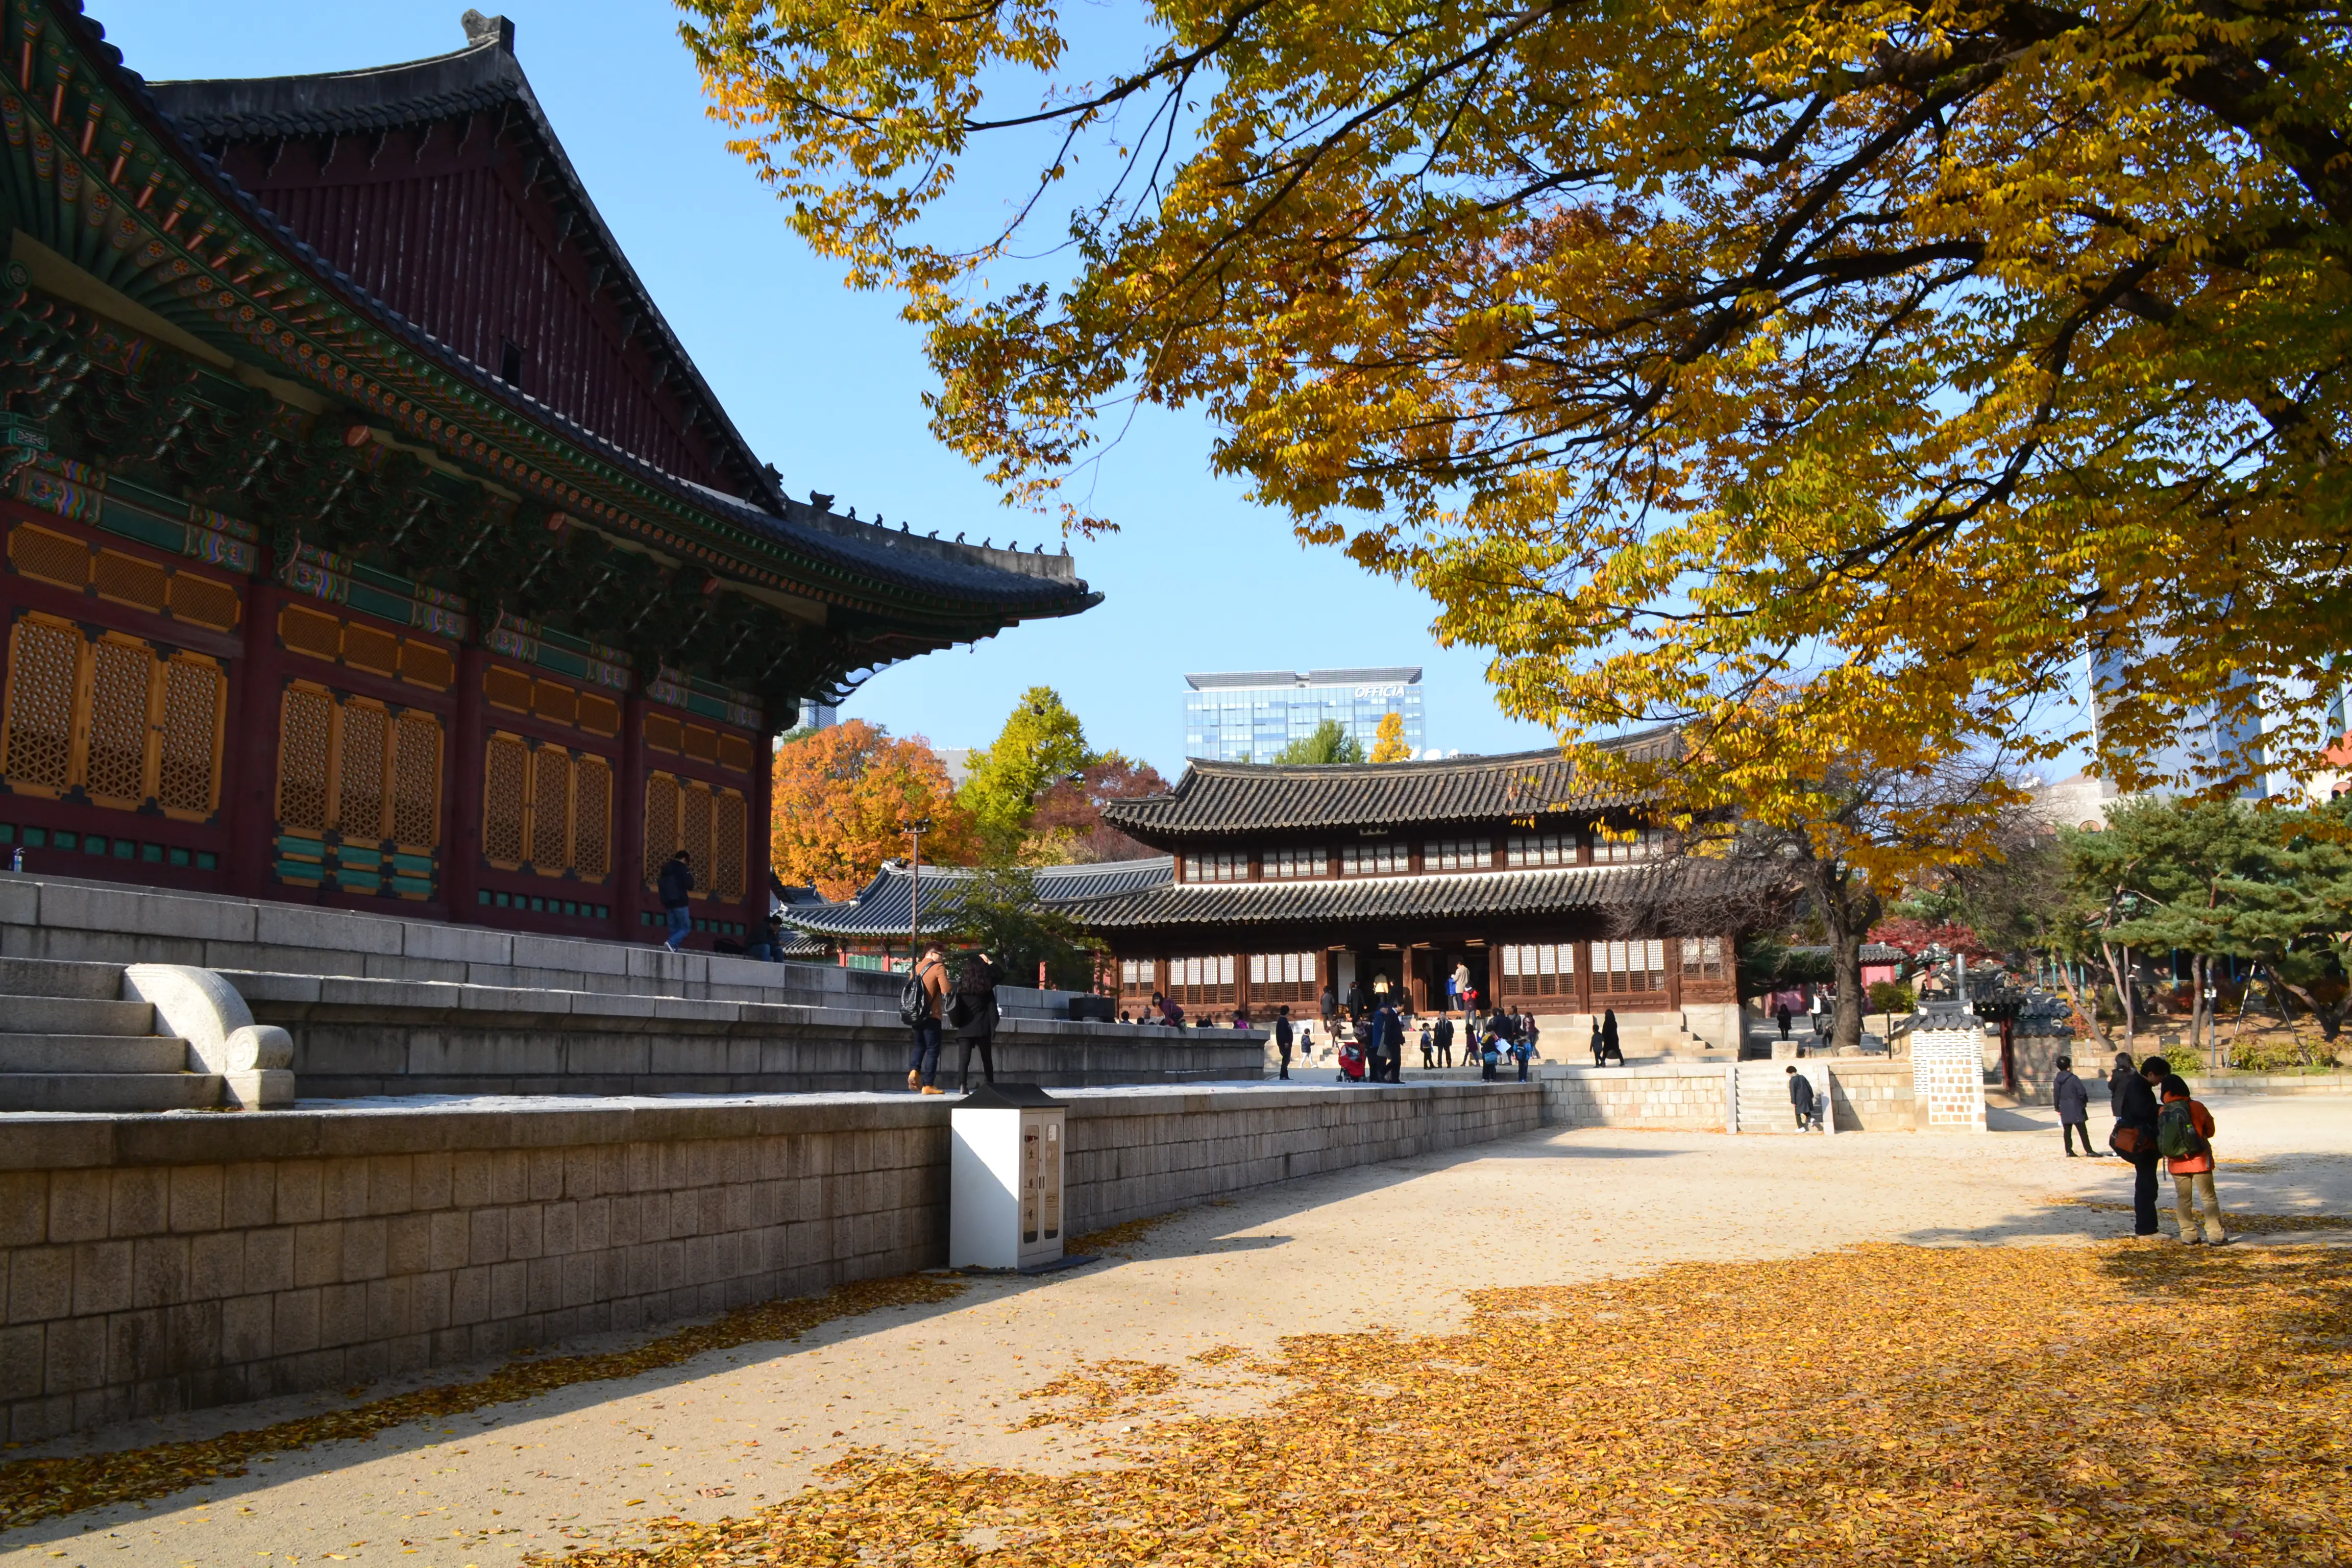 Visiting Deoksugung Palace in Seoul, South Korea